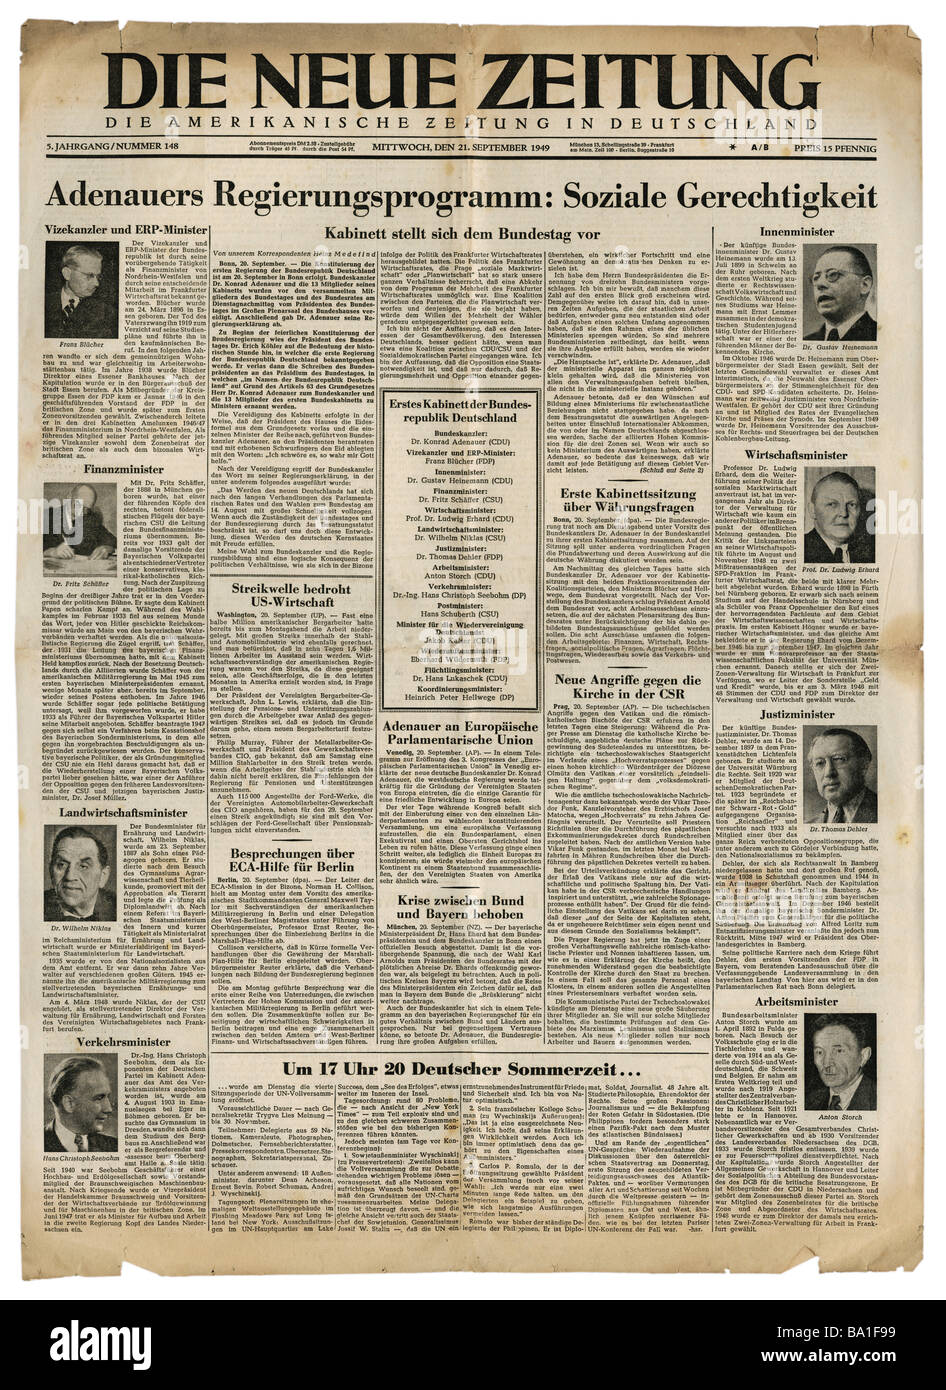 press/media, magazines, 'Die Neue Zeitung', Munich, 5 volume, number 148, Wednesday 21.9.1959, title, formation of first German government after war, , Stock Photo